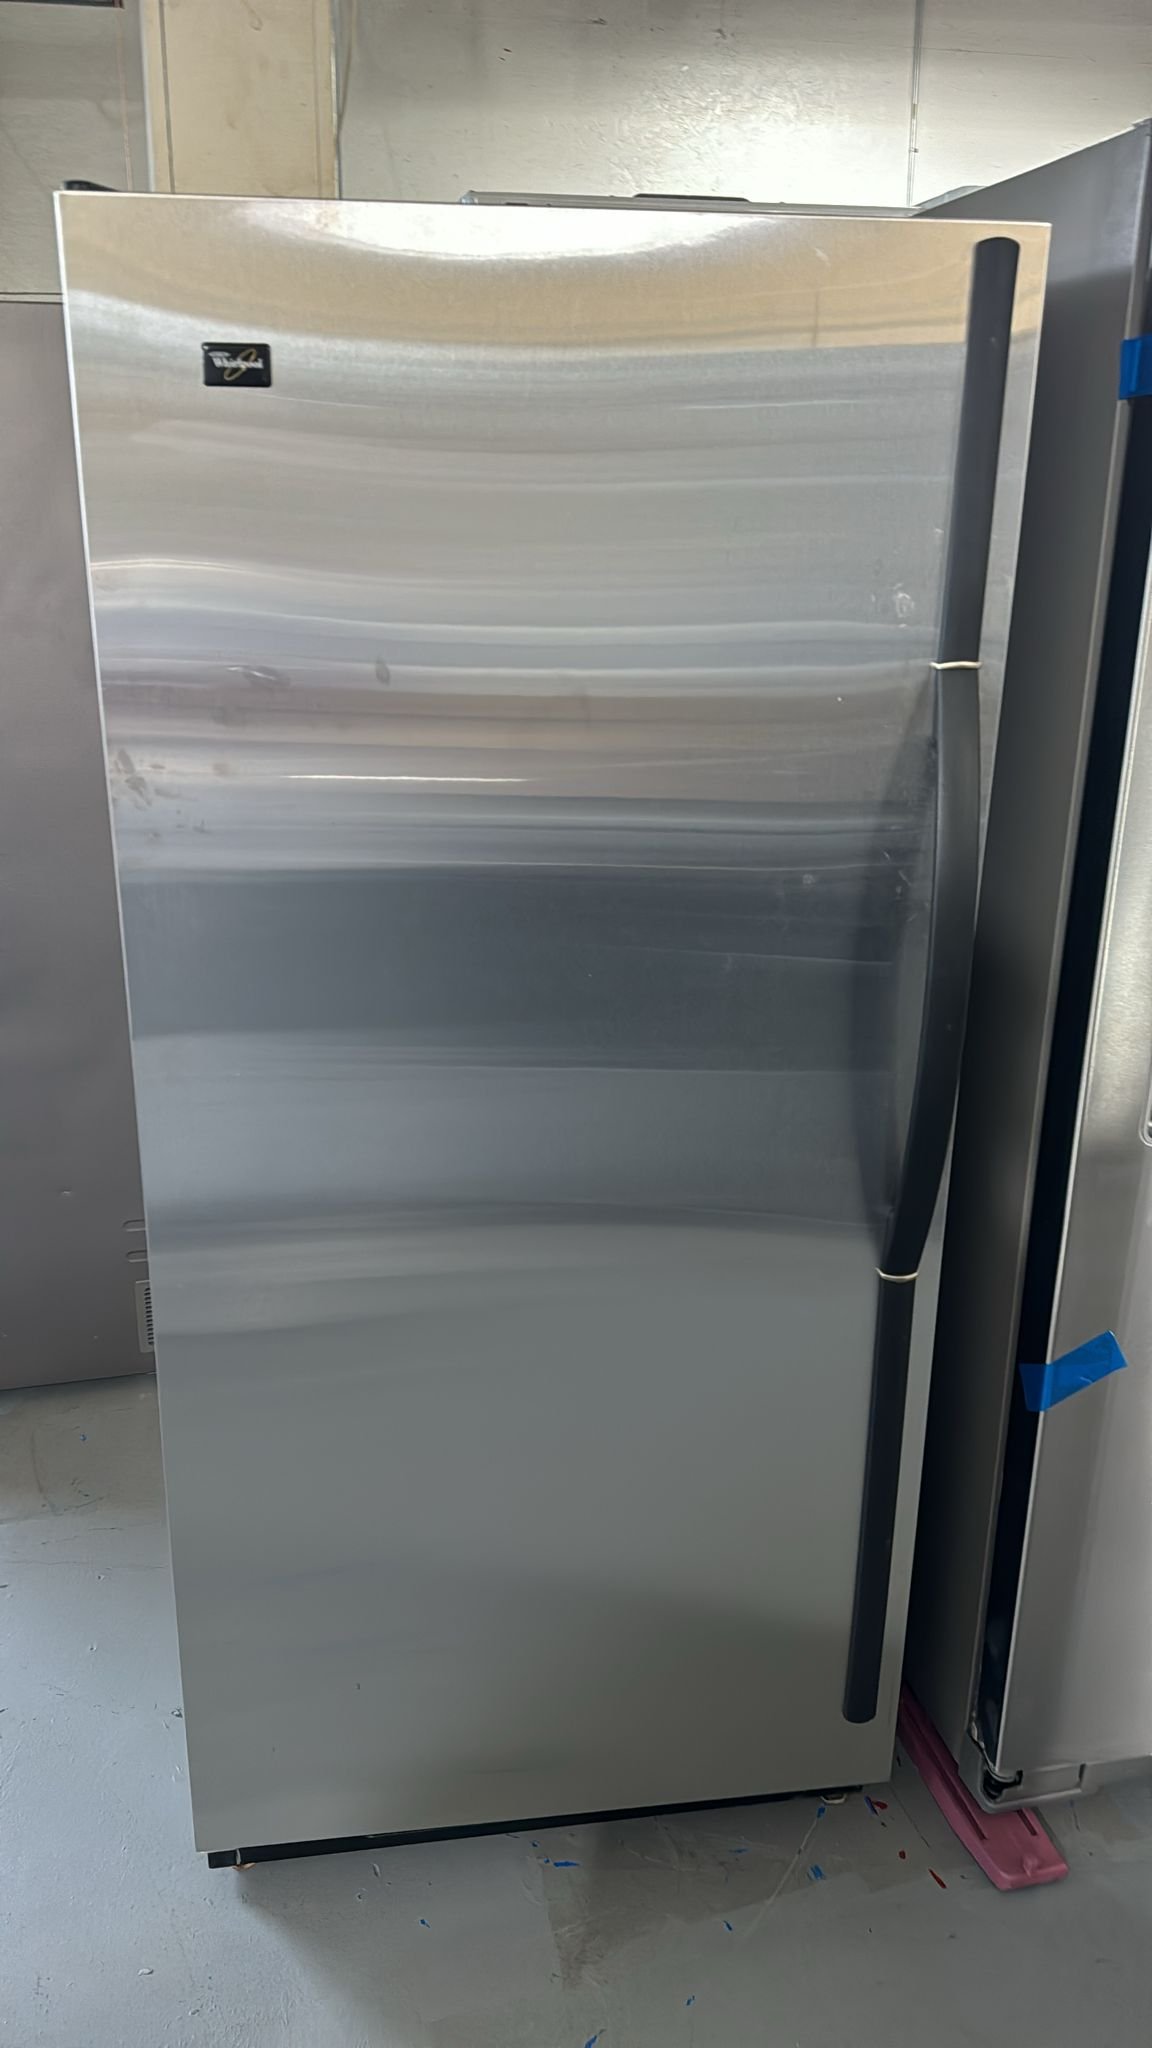 Whirlpool New Upright Freezer – Stainless